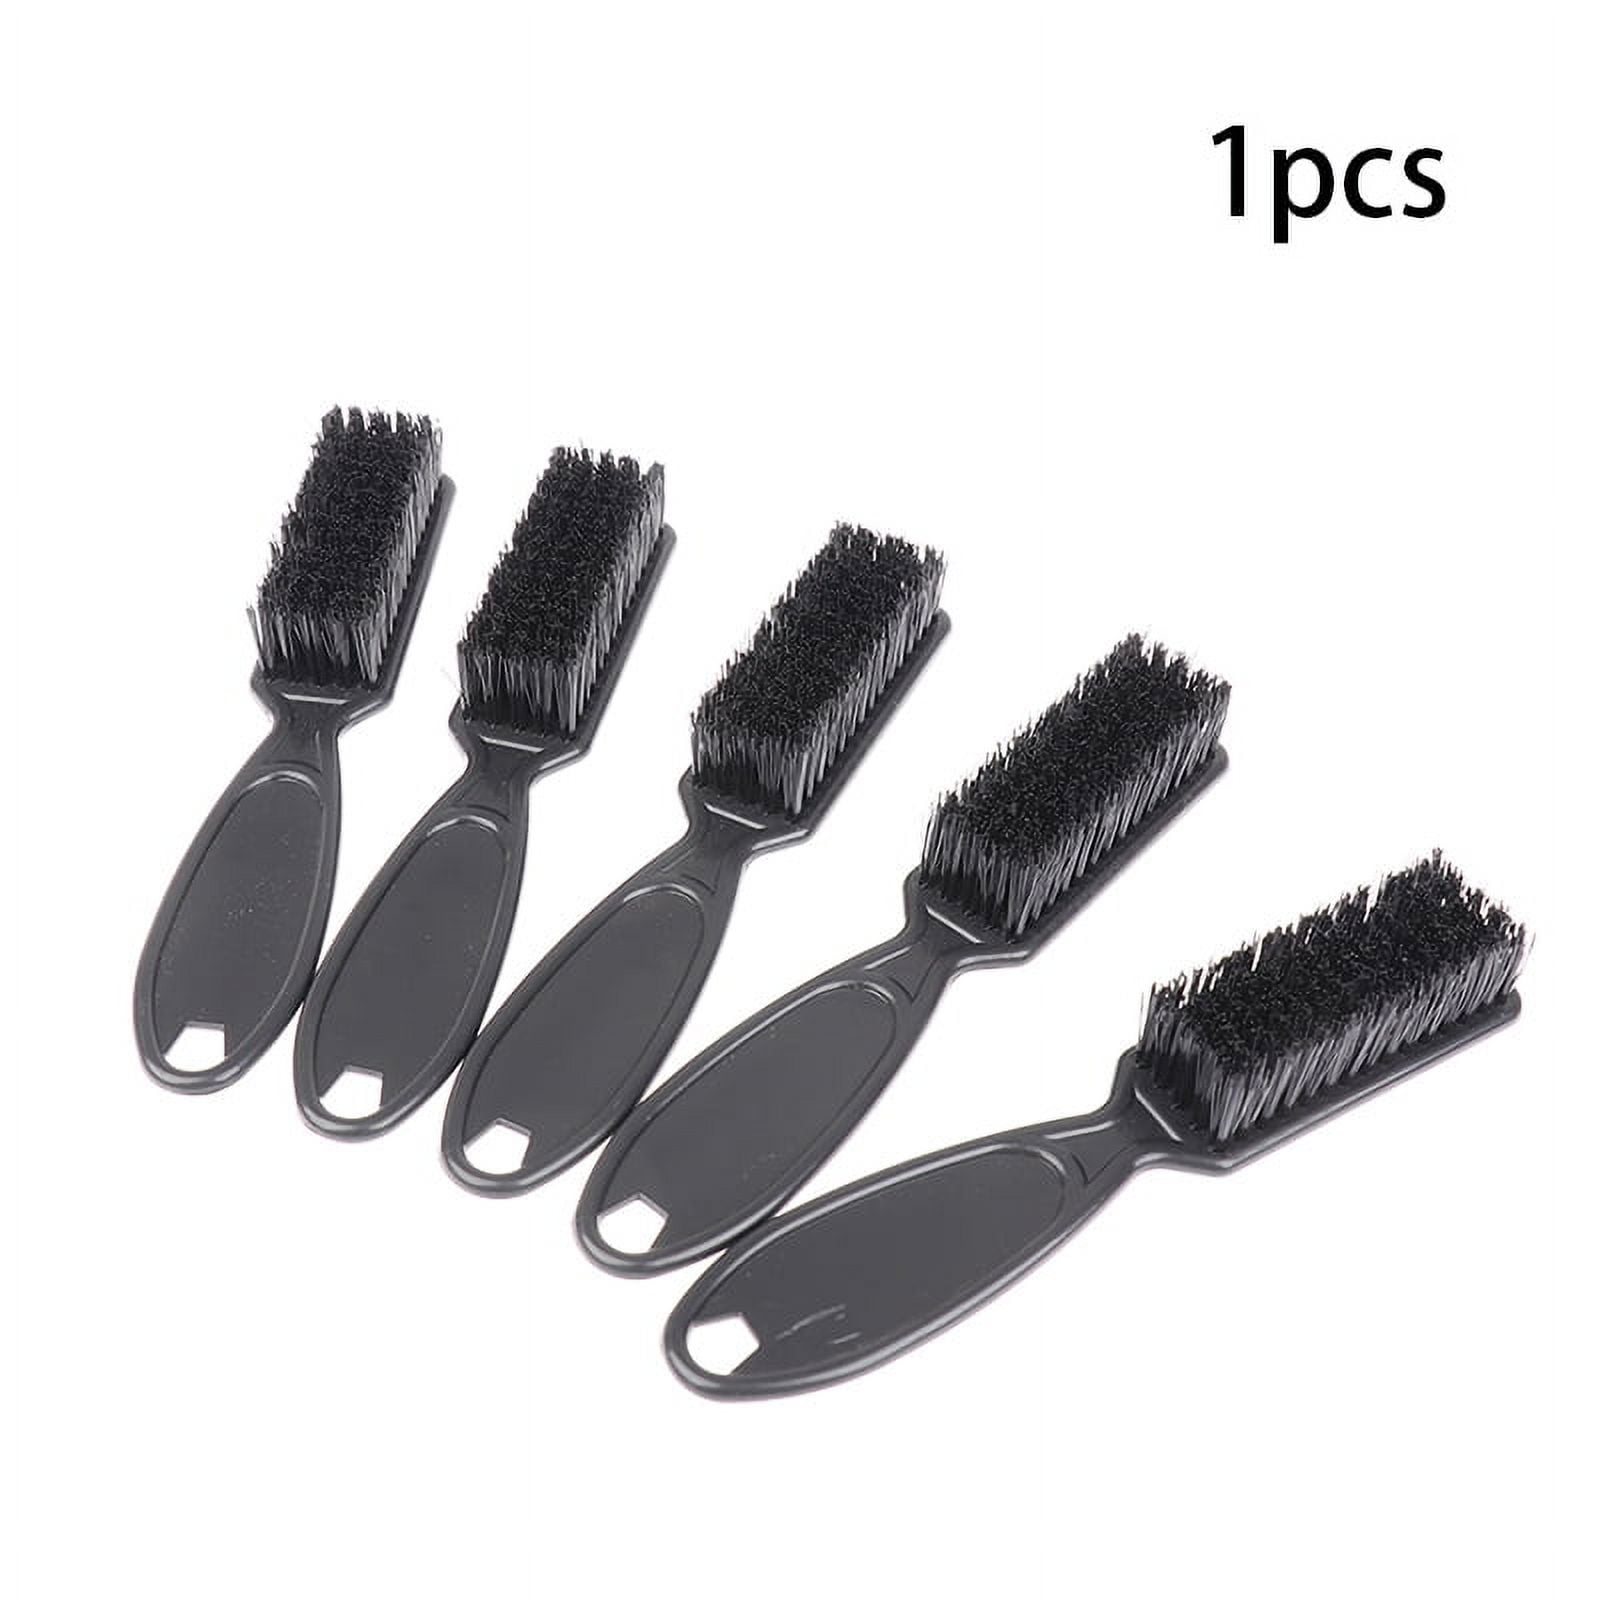 Beard Fade Brush / Comb Scissors Cleaning Brush / Barber Shop Salon Skin  Fade